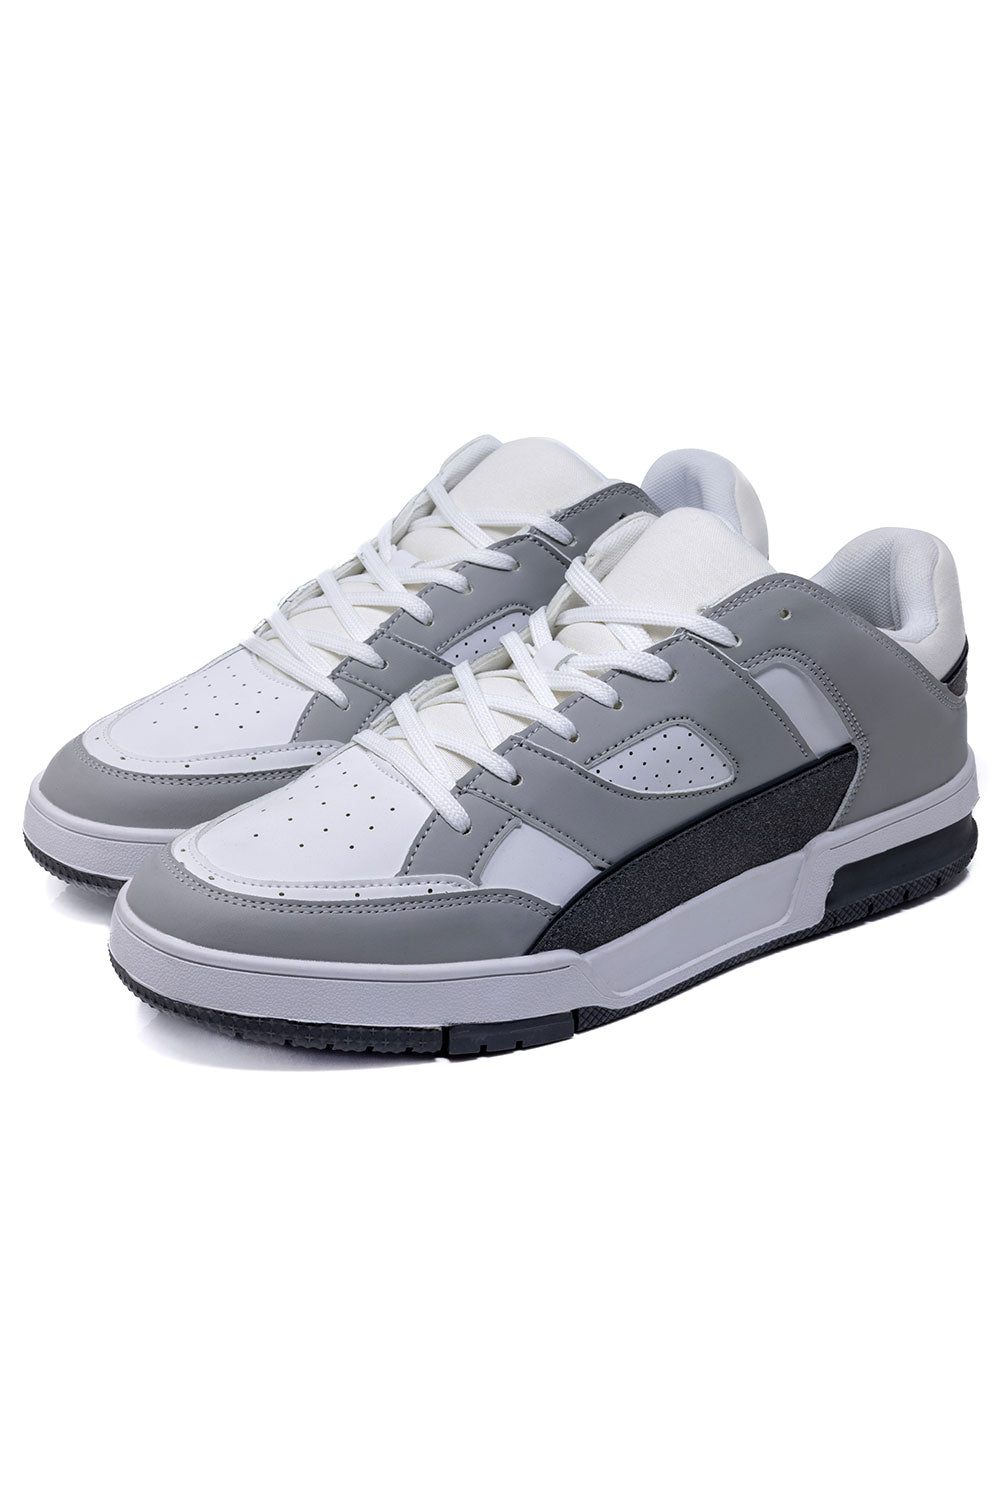 Barabas Men's Premium Running Multicolor Leather Sneakers 4SK01 Light Grey